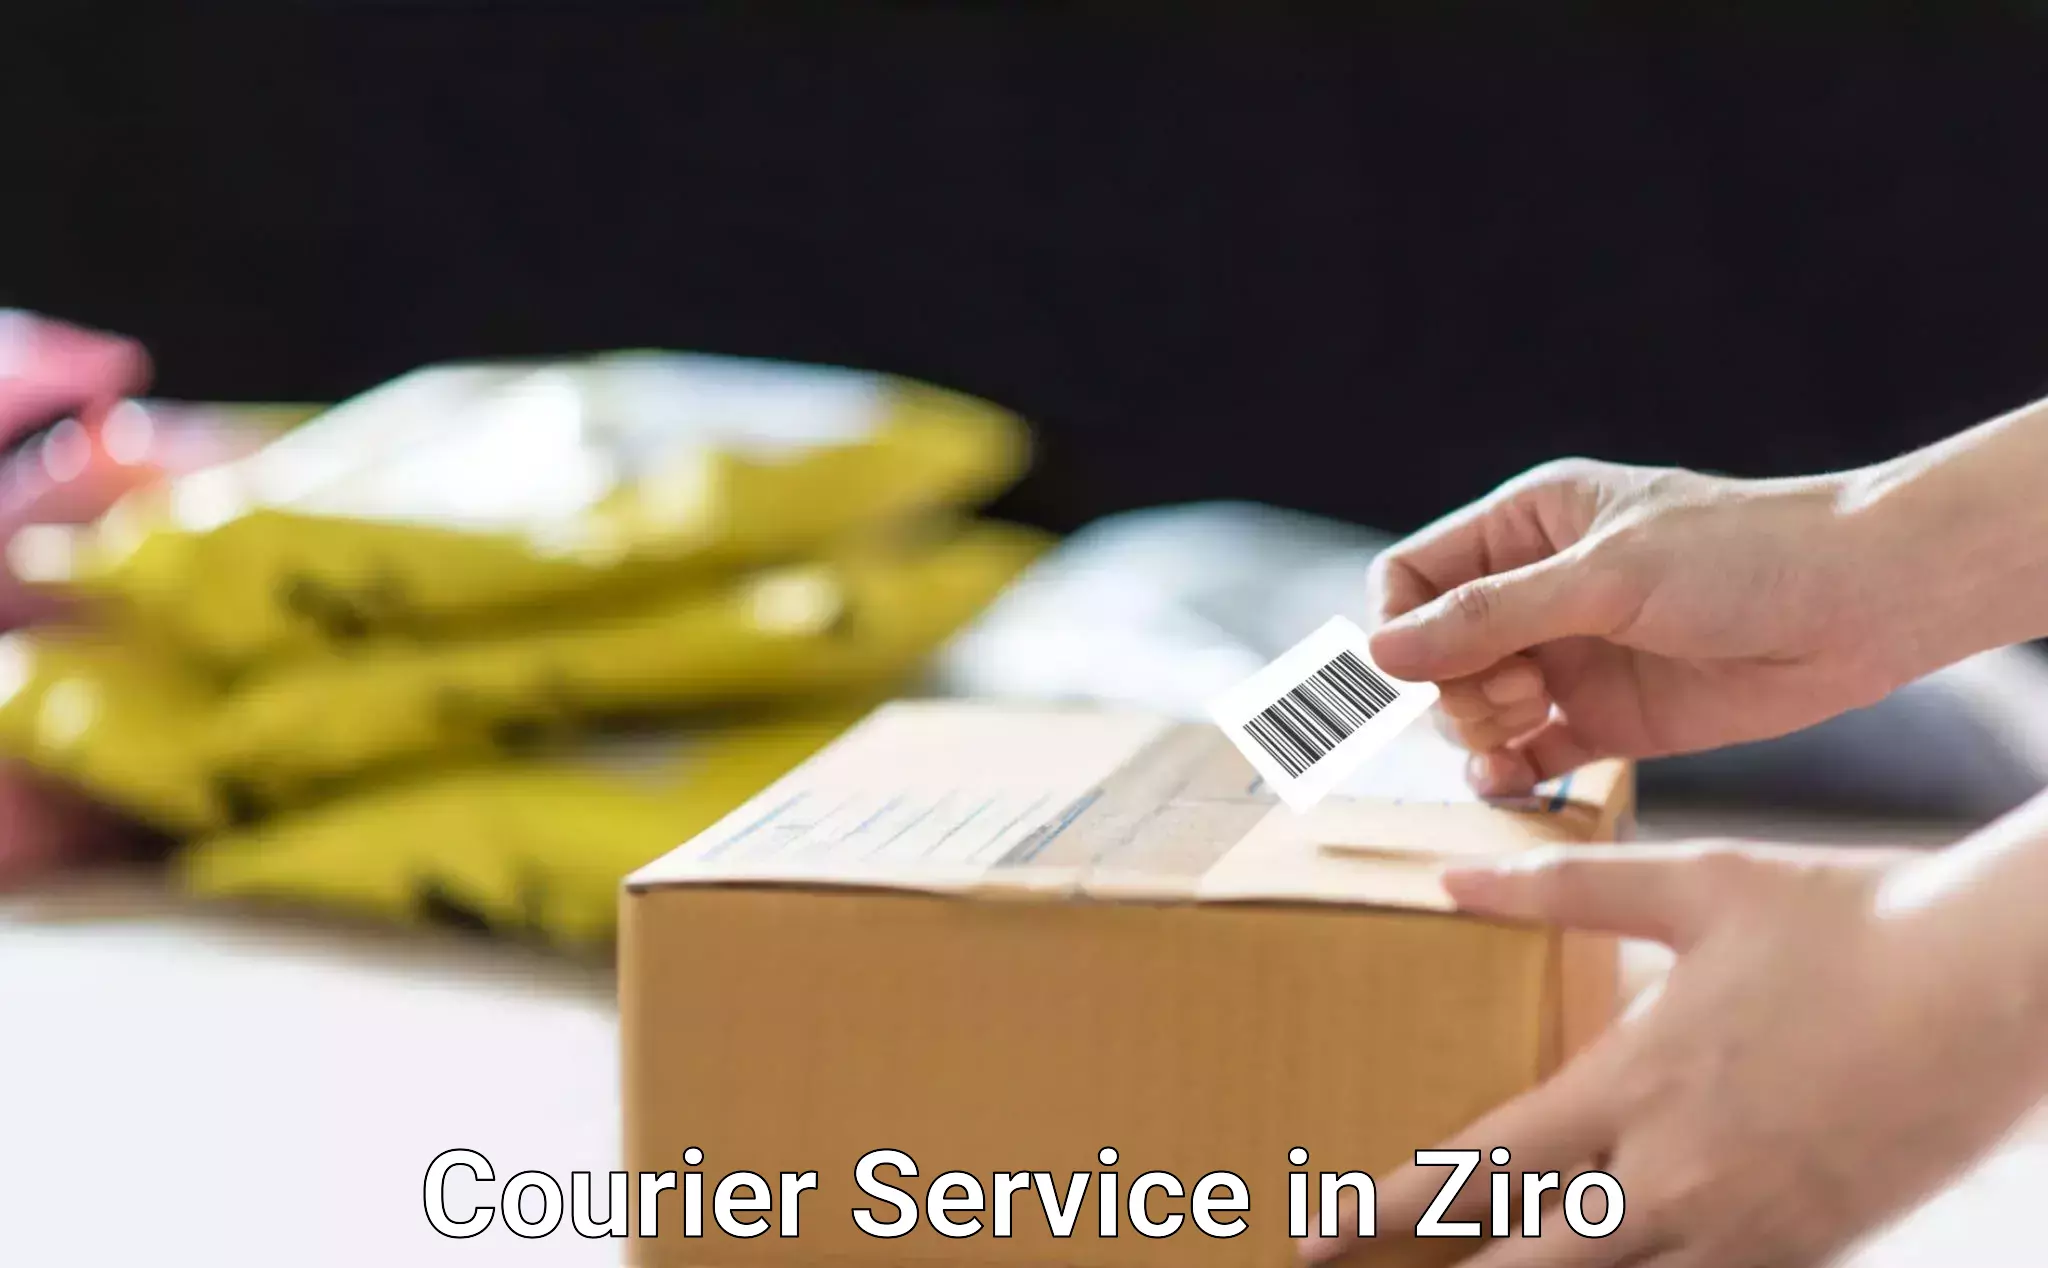 Comprehensive freight services in Ziro